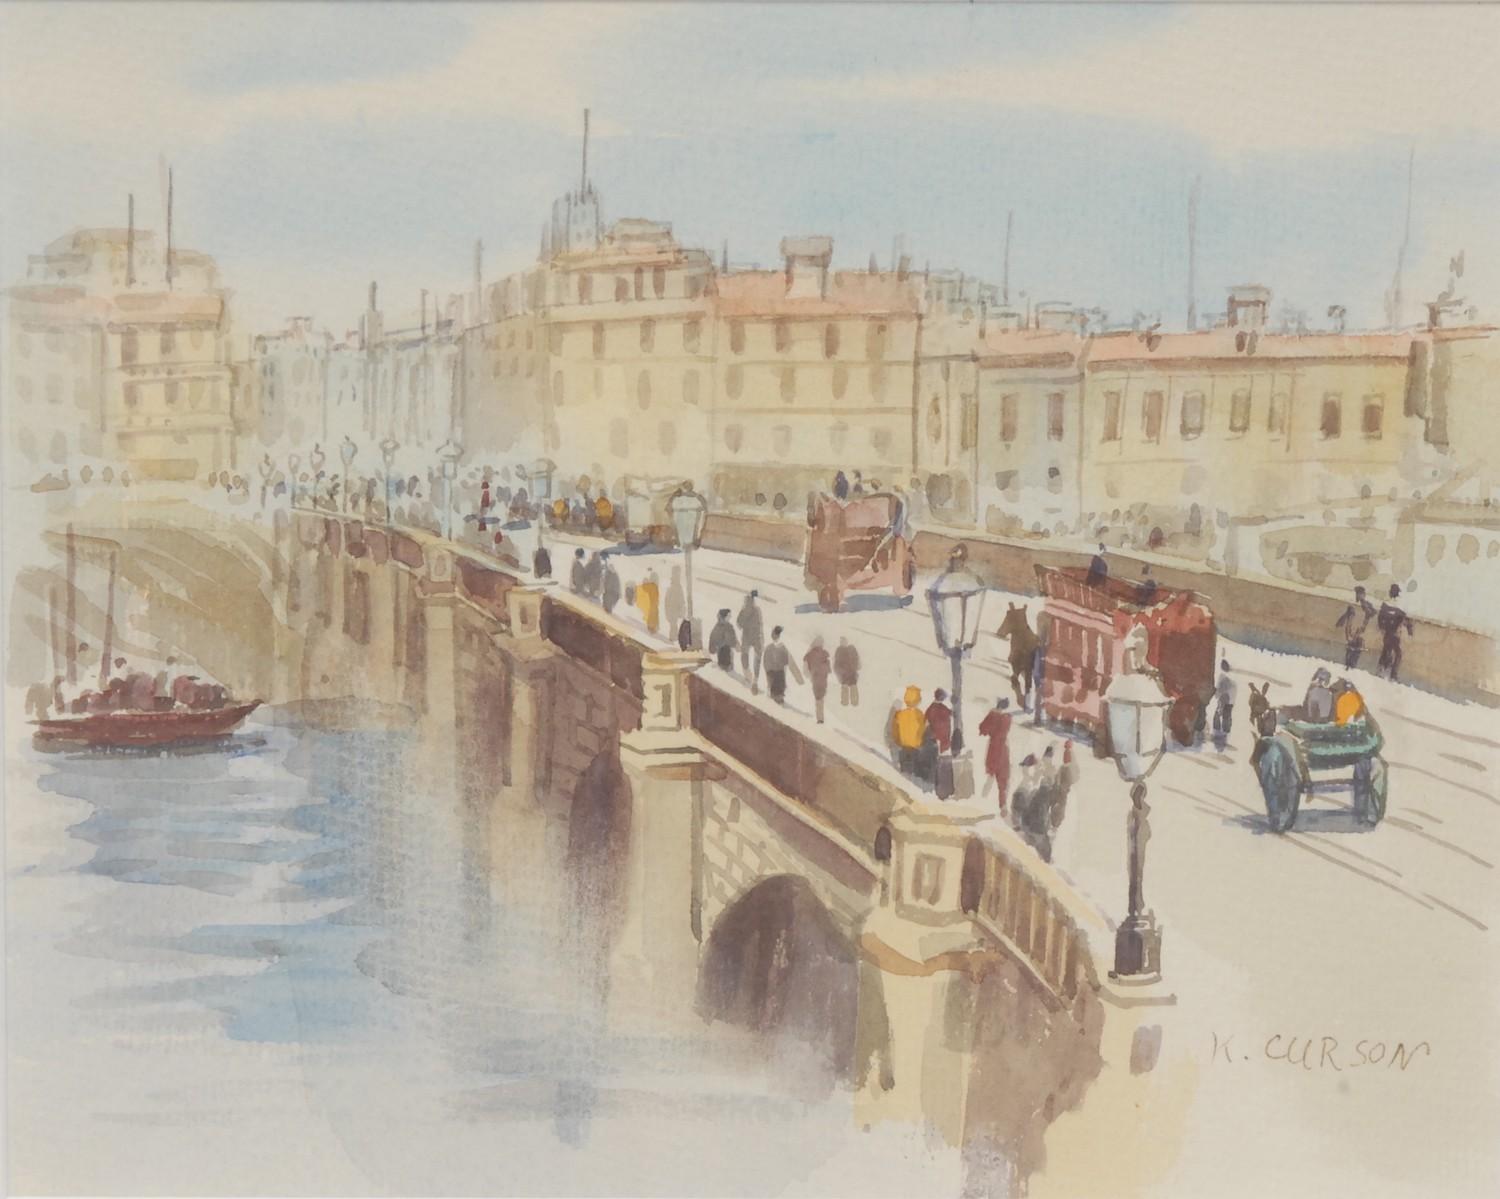 K**Curson (20th century) Horse Trams crossing a Bridge signed, watercolour, 20cm x 25cm